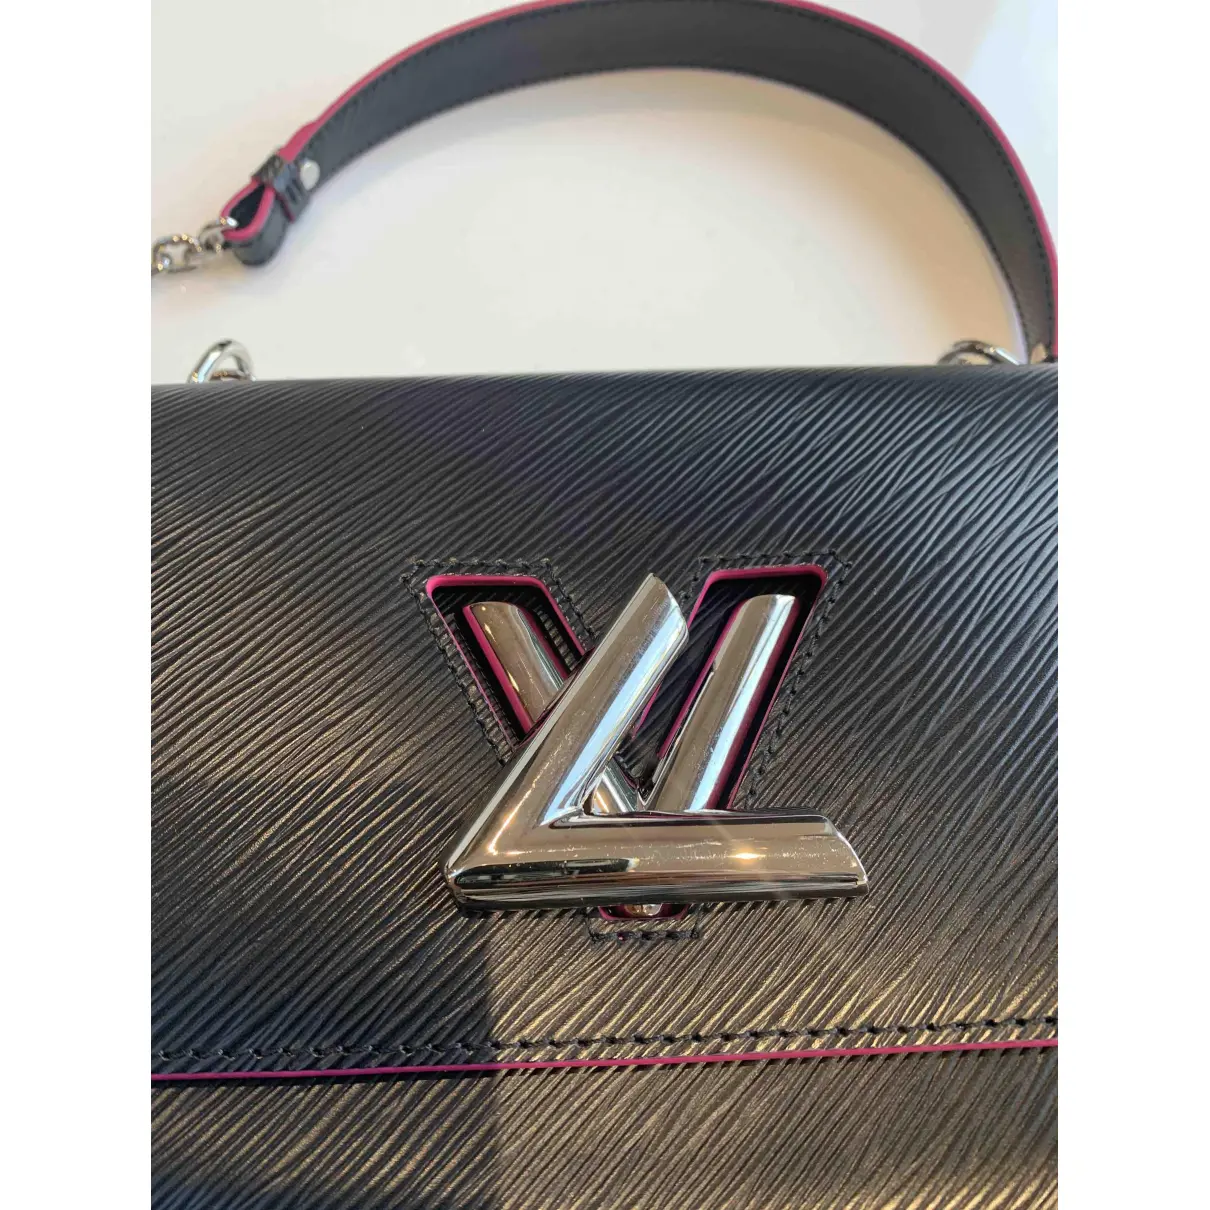 Buy Louis Vuitton Twist leather handbag online